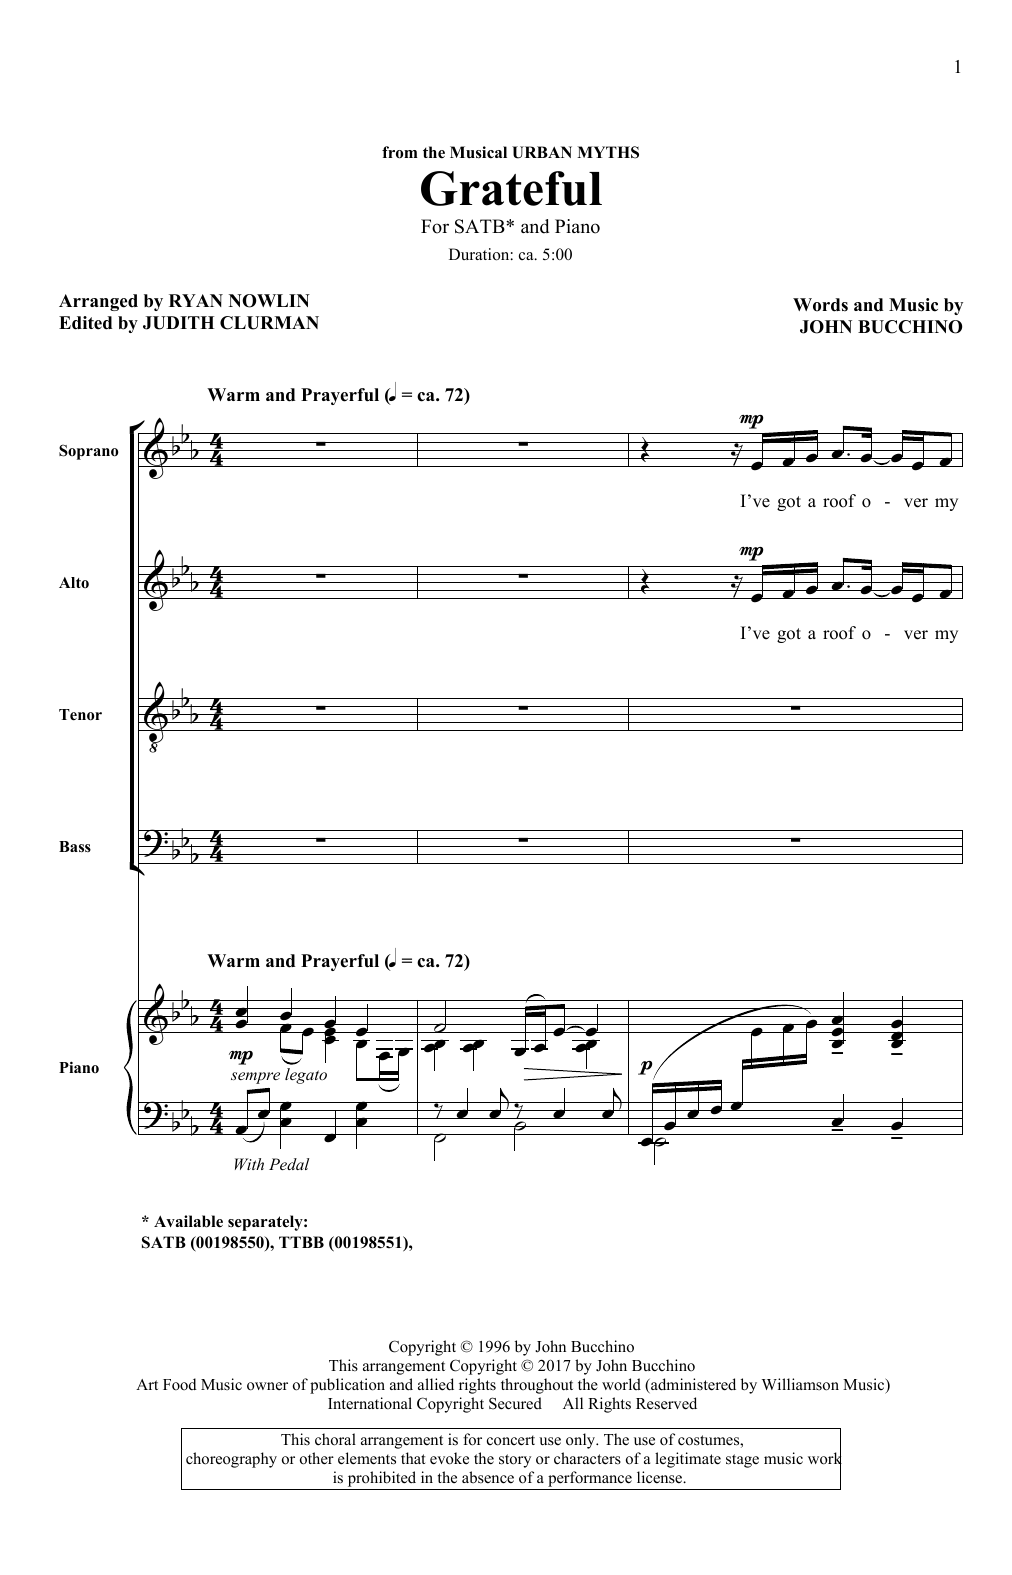 Ryan Nowlin Grateful Sheet Music Notes & Chords for SATB - Download or Print PDF